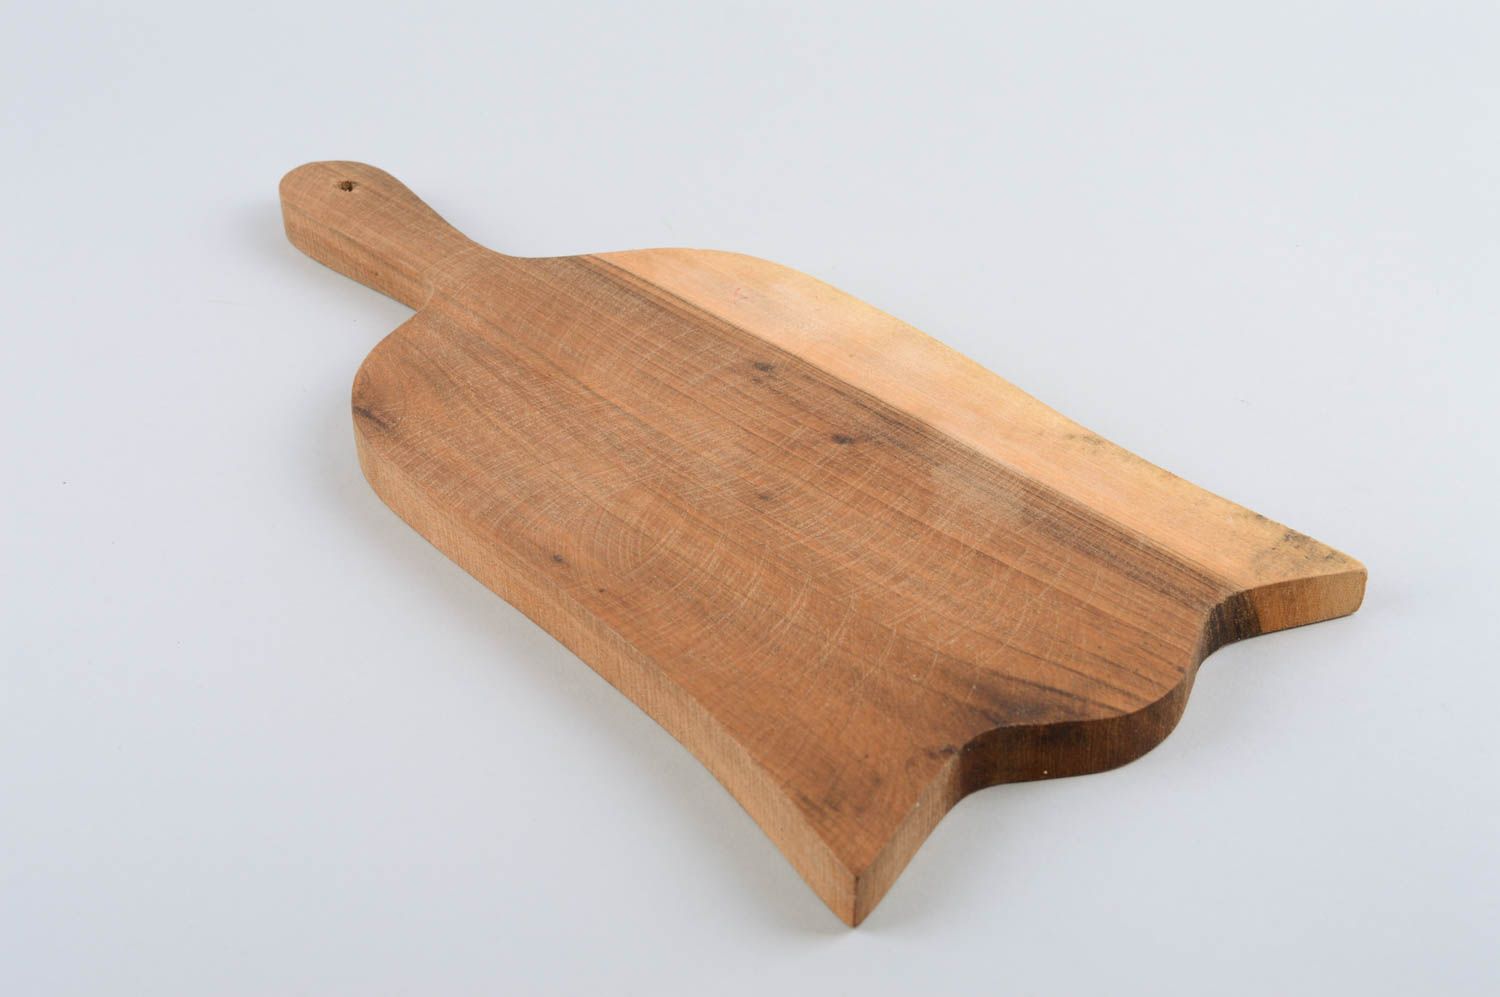 Handmade wooden cutting board chopping board kitchen decor wooden utensils photo 3